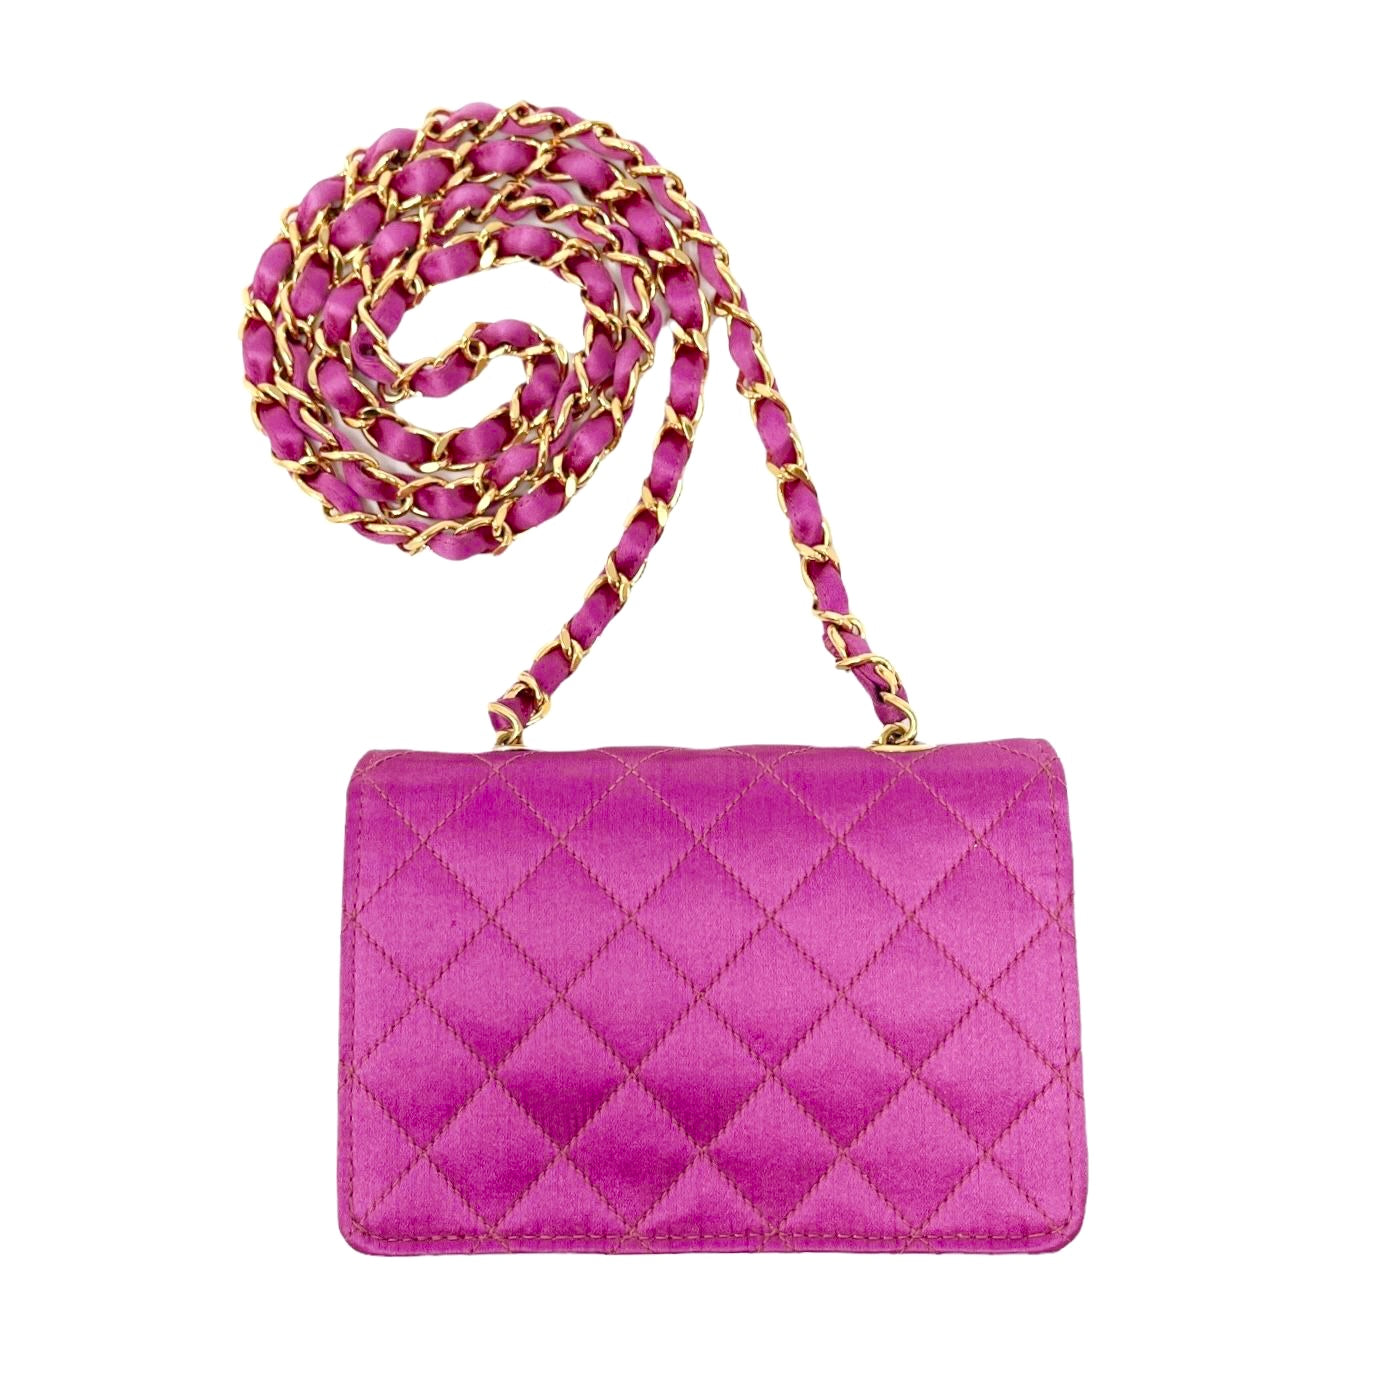 Chanel Mini Flap Bag A69900 B10842 NN413, Pink, One Size